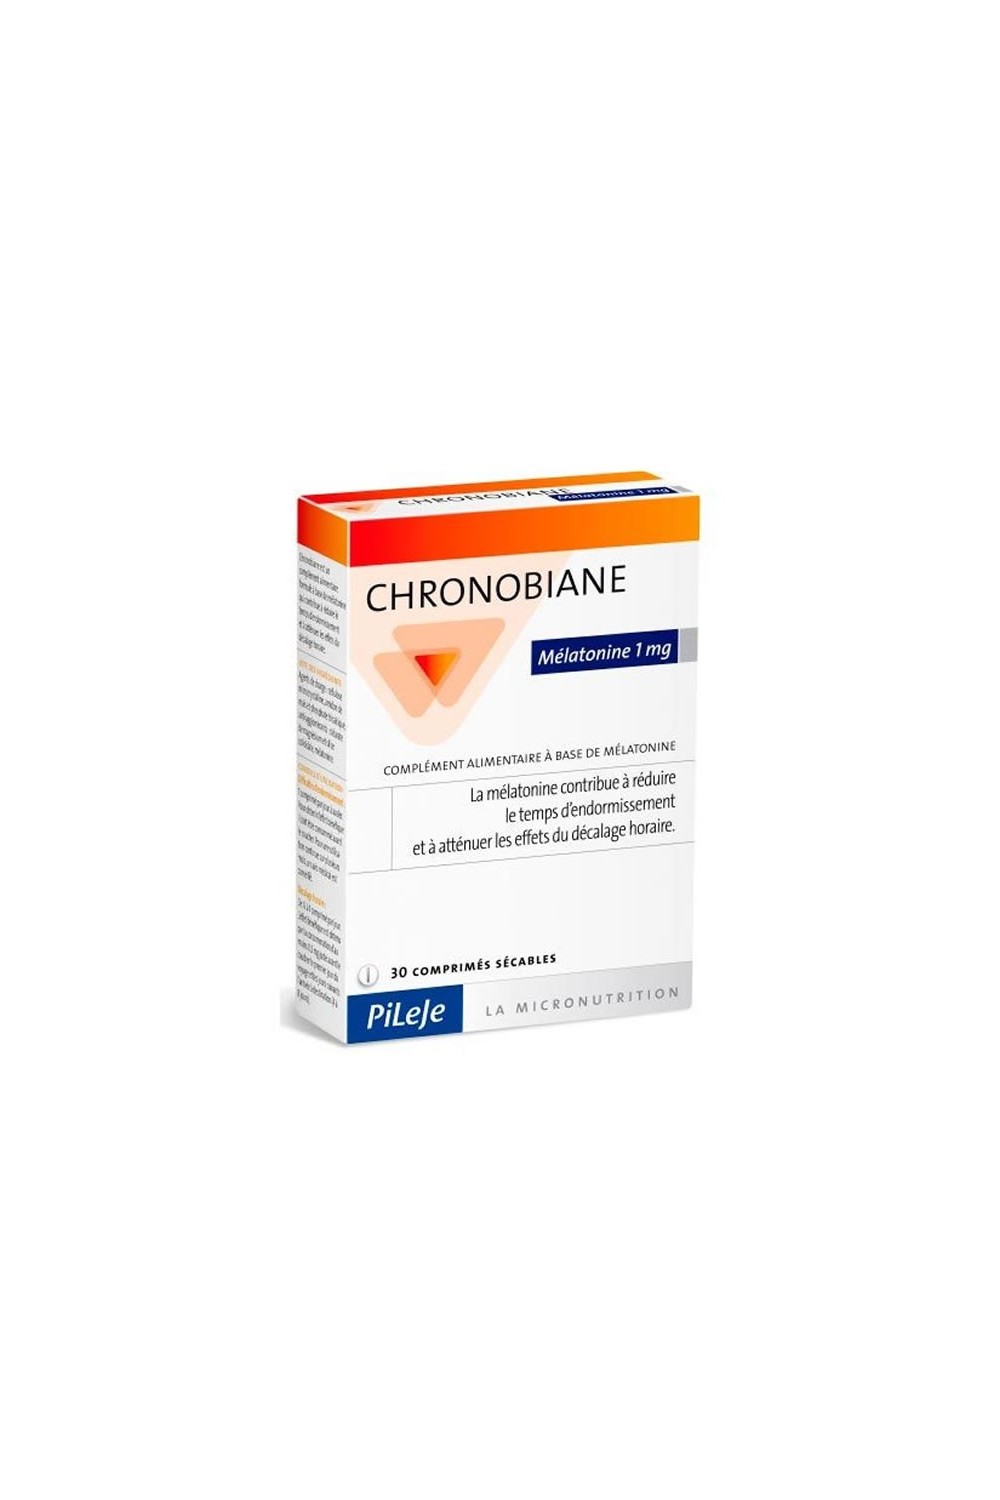 Pileje Chronobiane Melatonin 1mg 30 Tablets